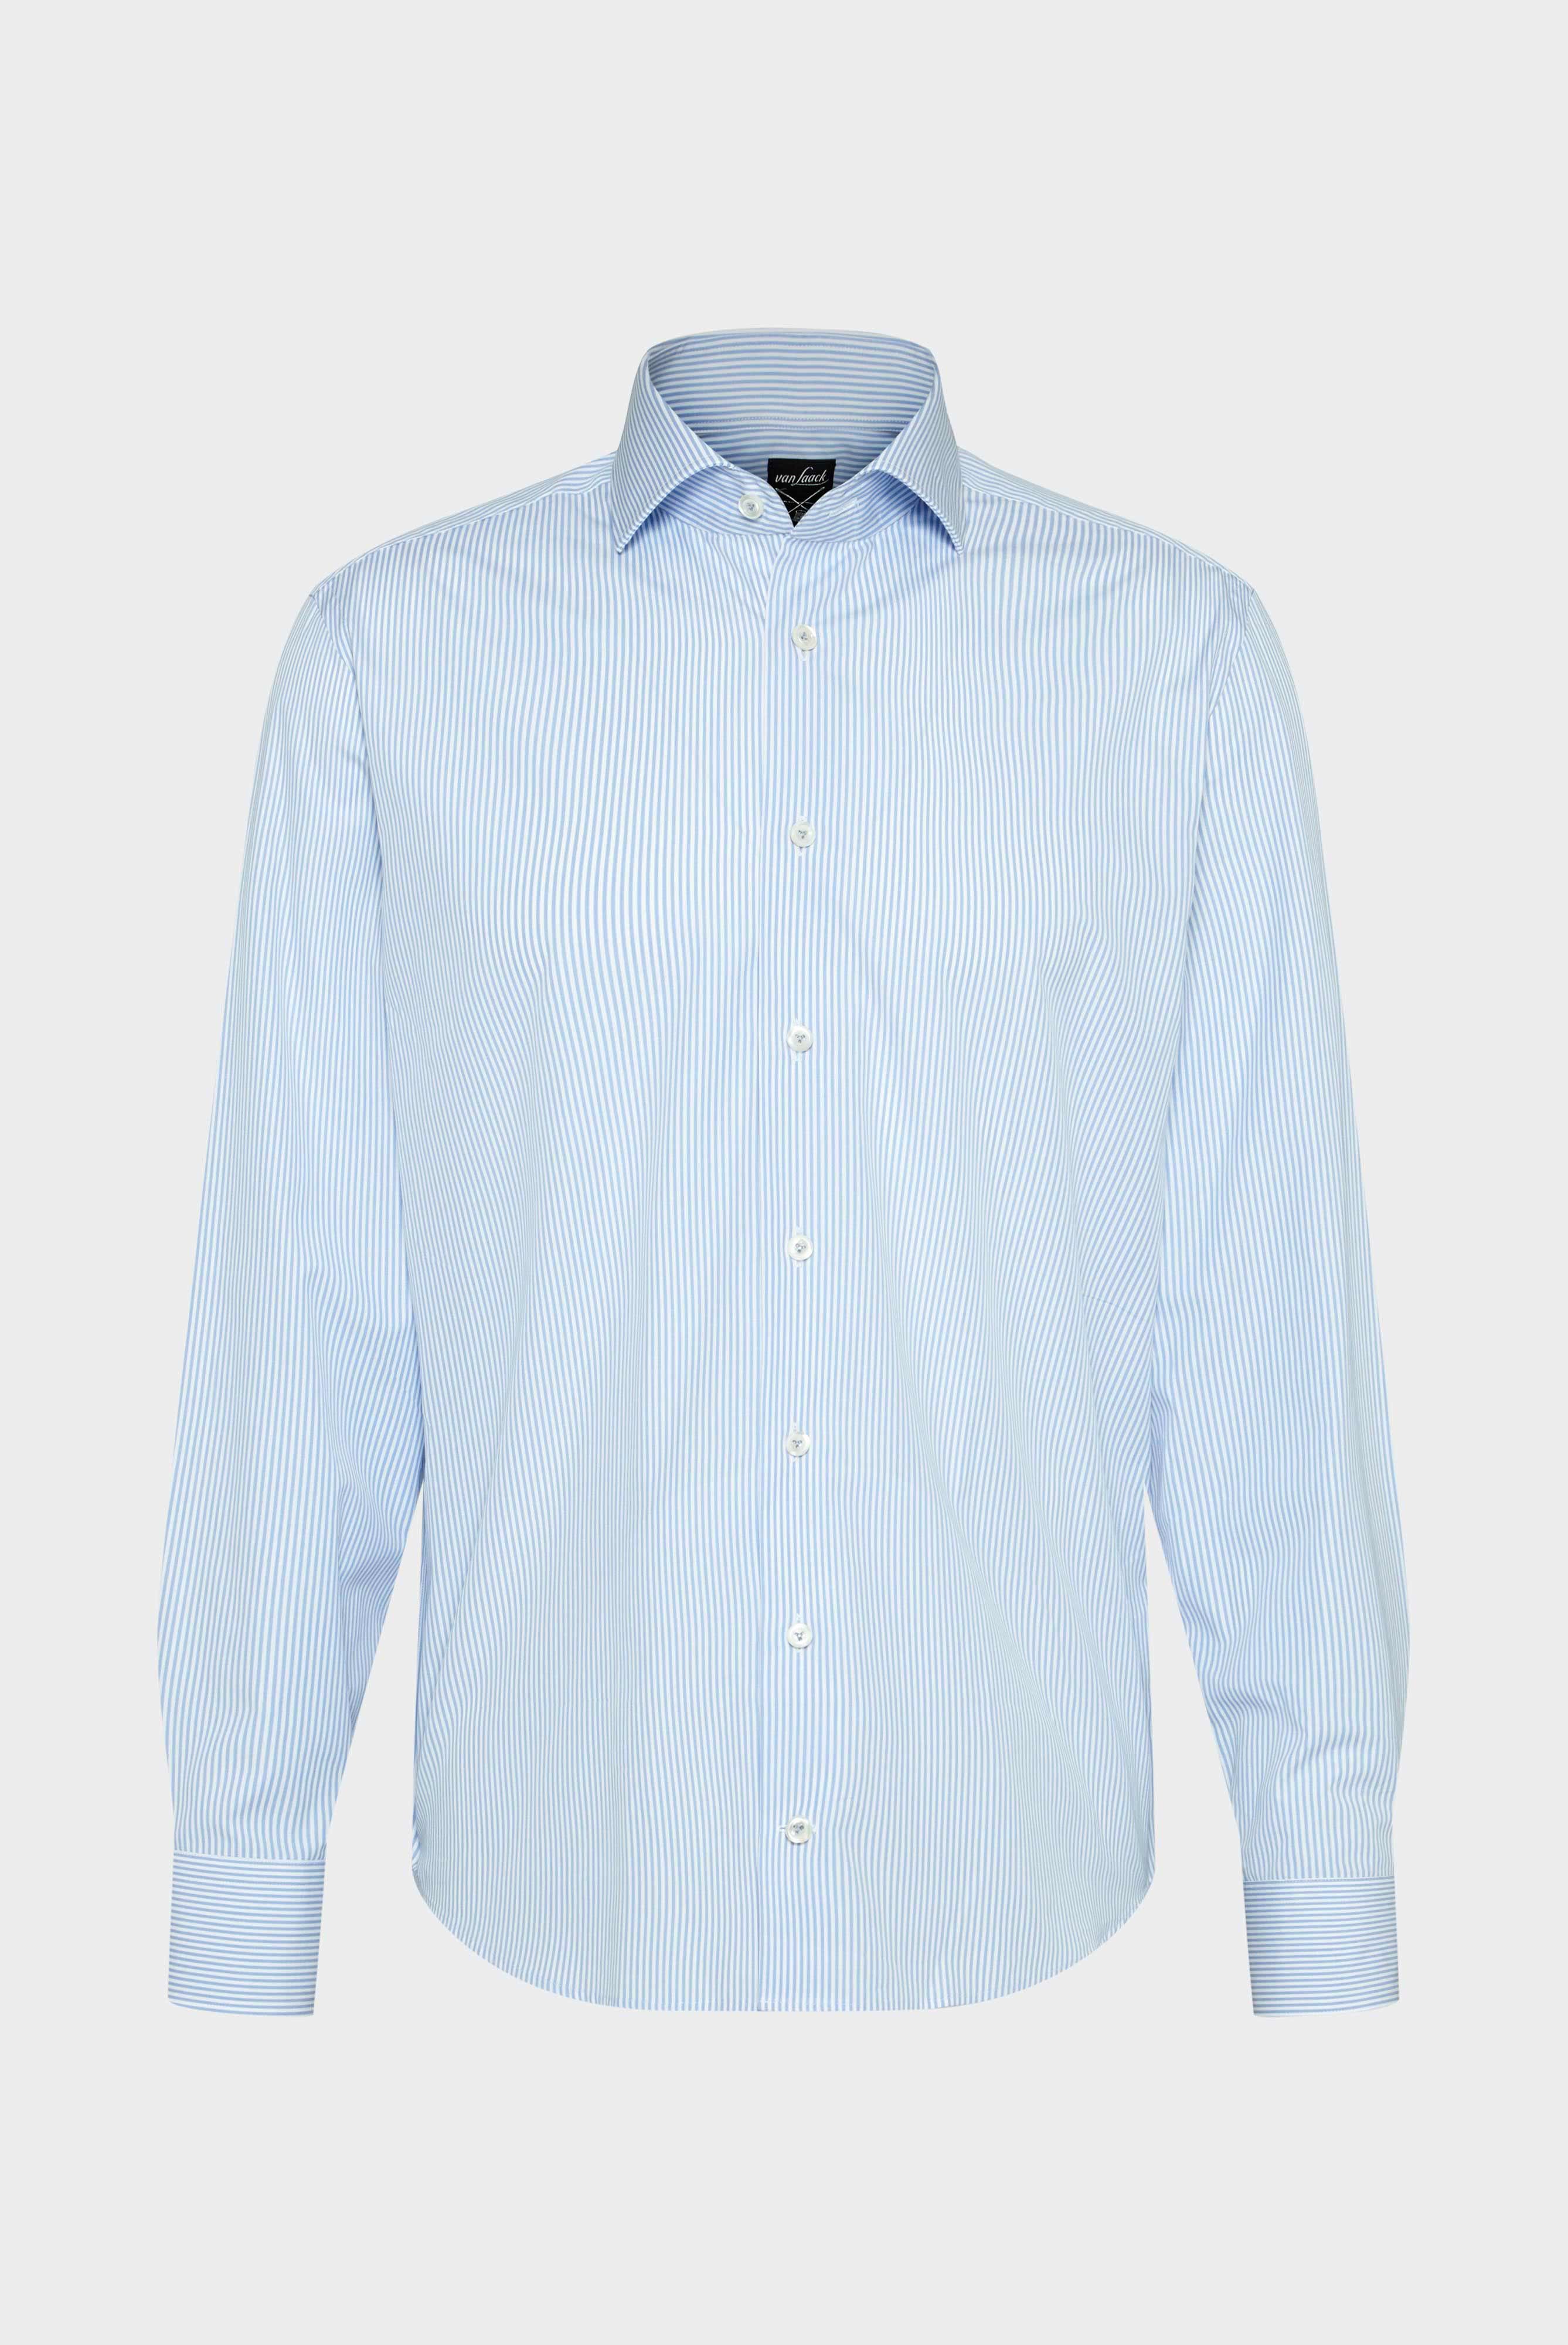 Easy Iron Shirts+Wrinkle Free Thin Striped Poplin Business Shirt+20.2020.AV.141786.720.37